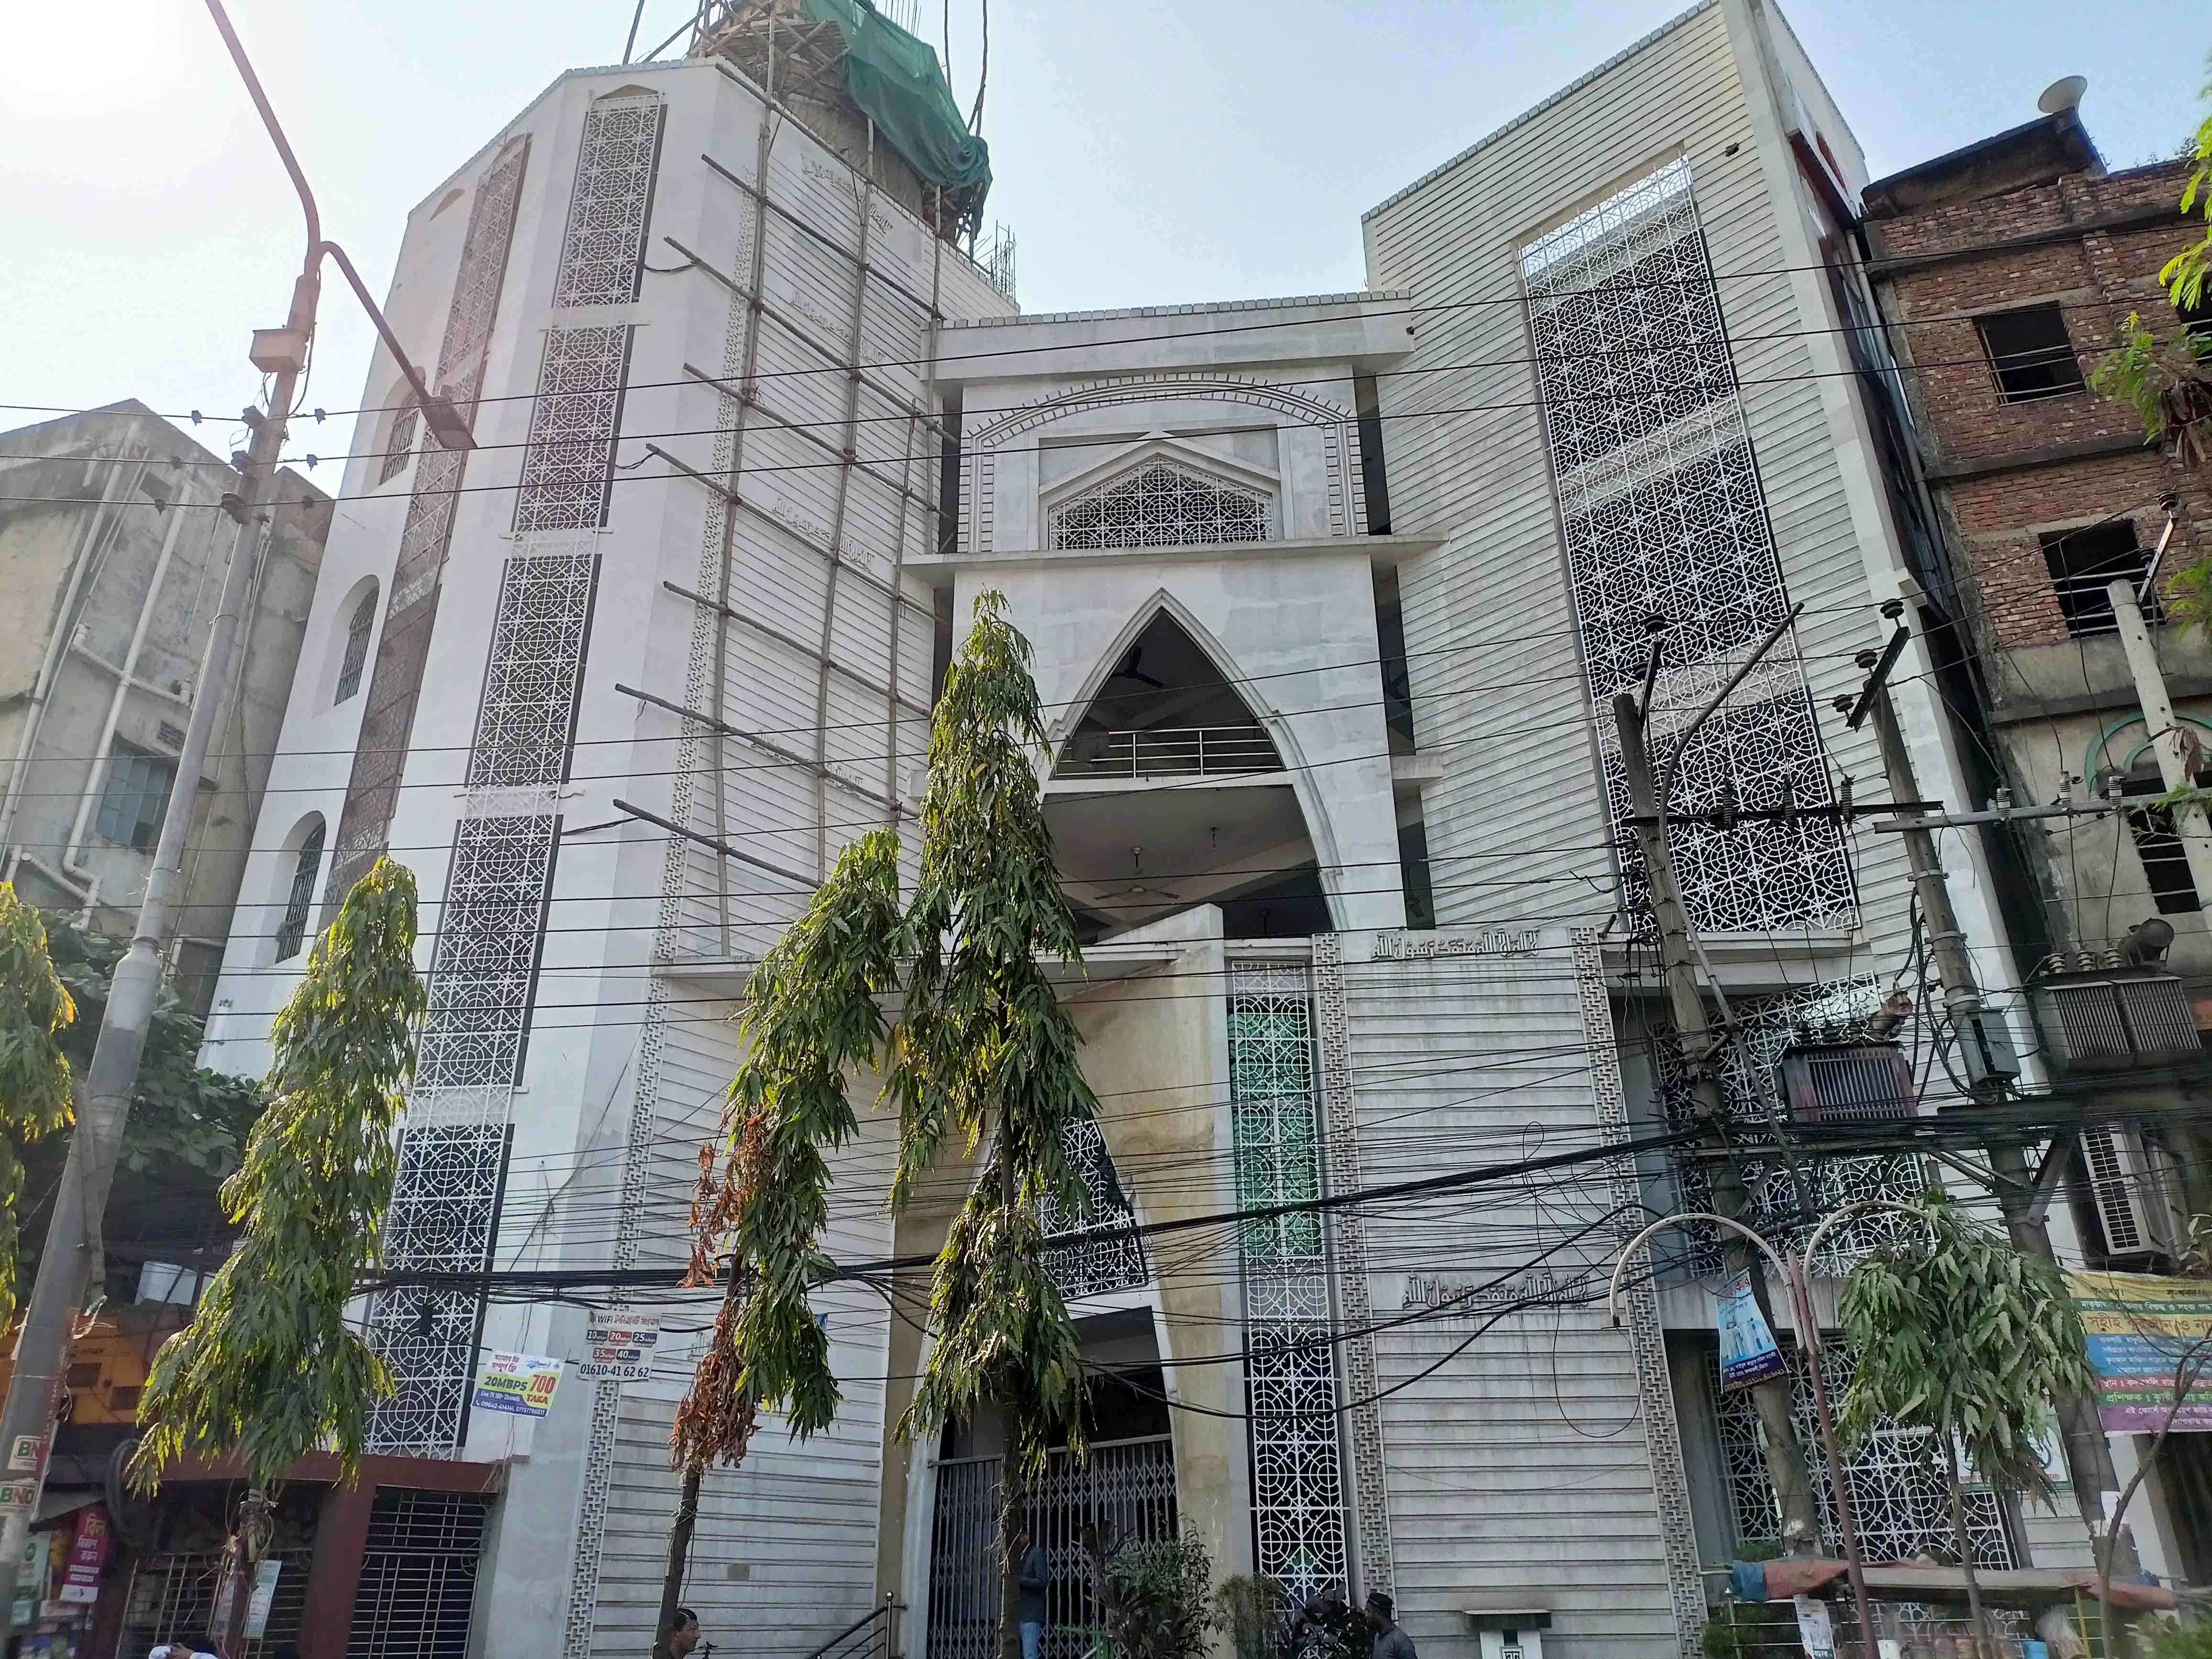 Baitul Jannat Mosque at Kadam Toli, Chattogram